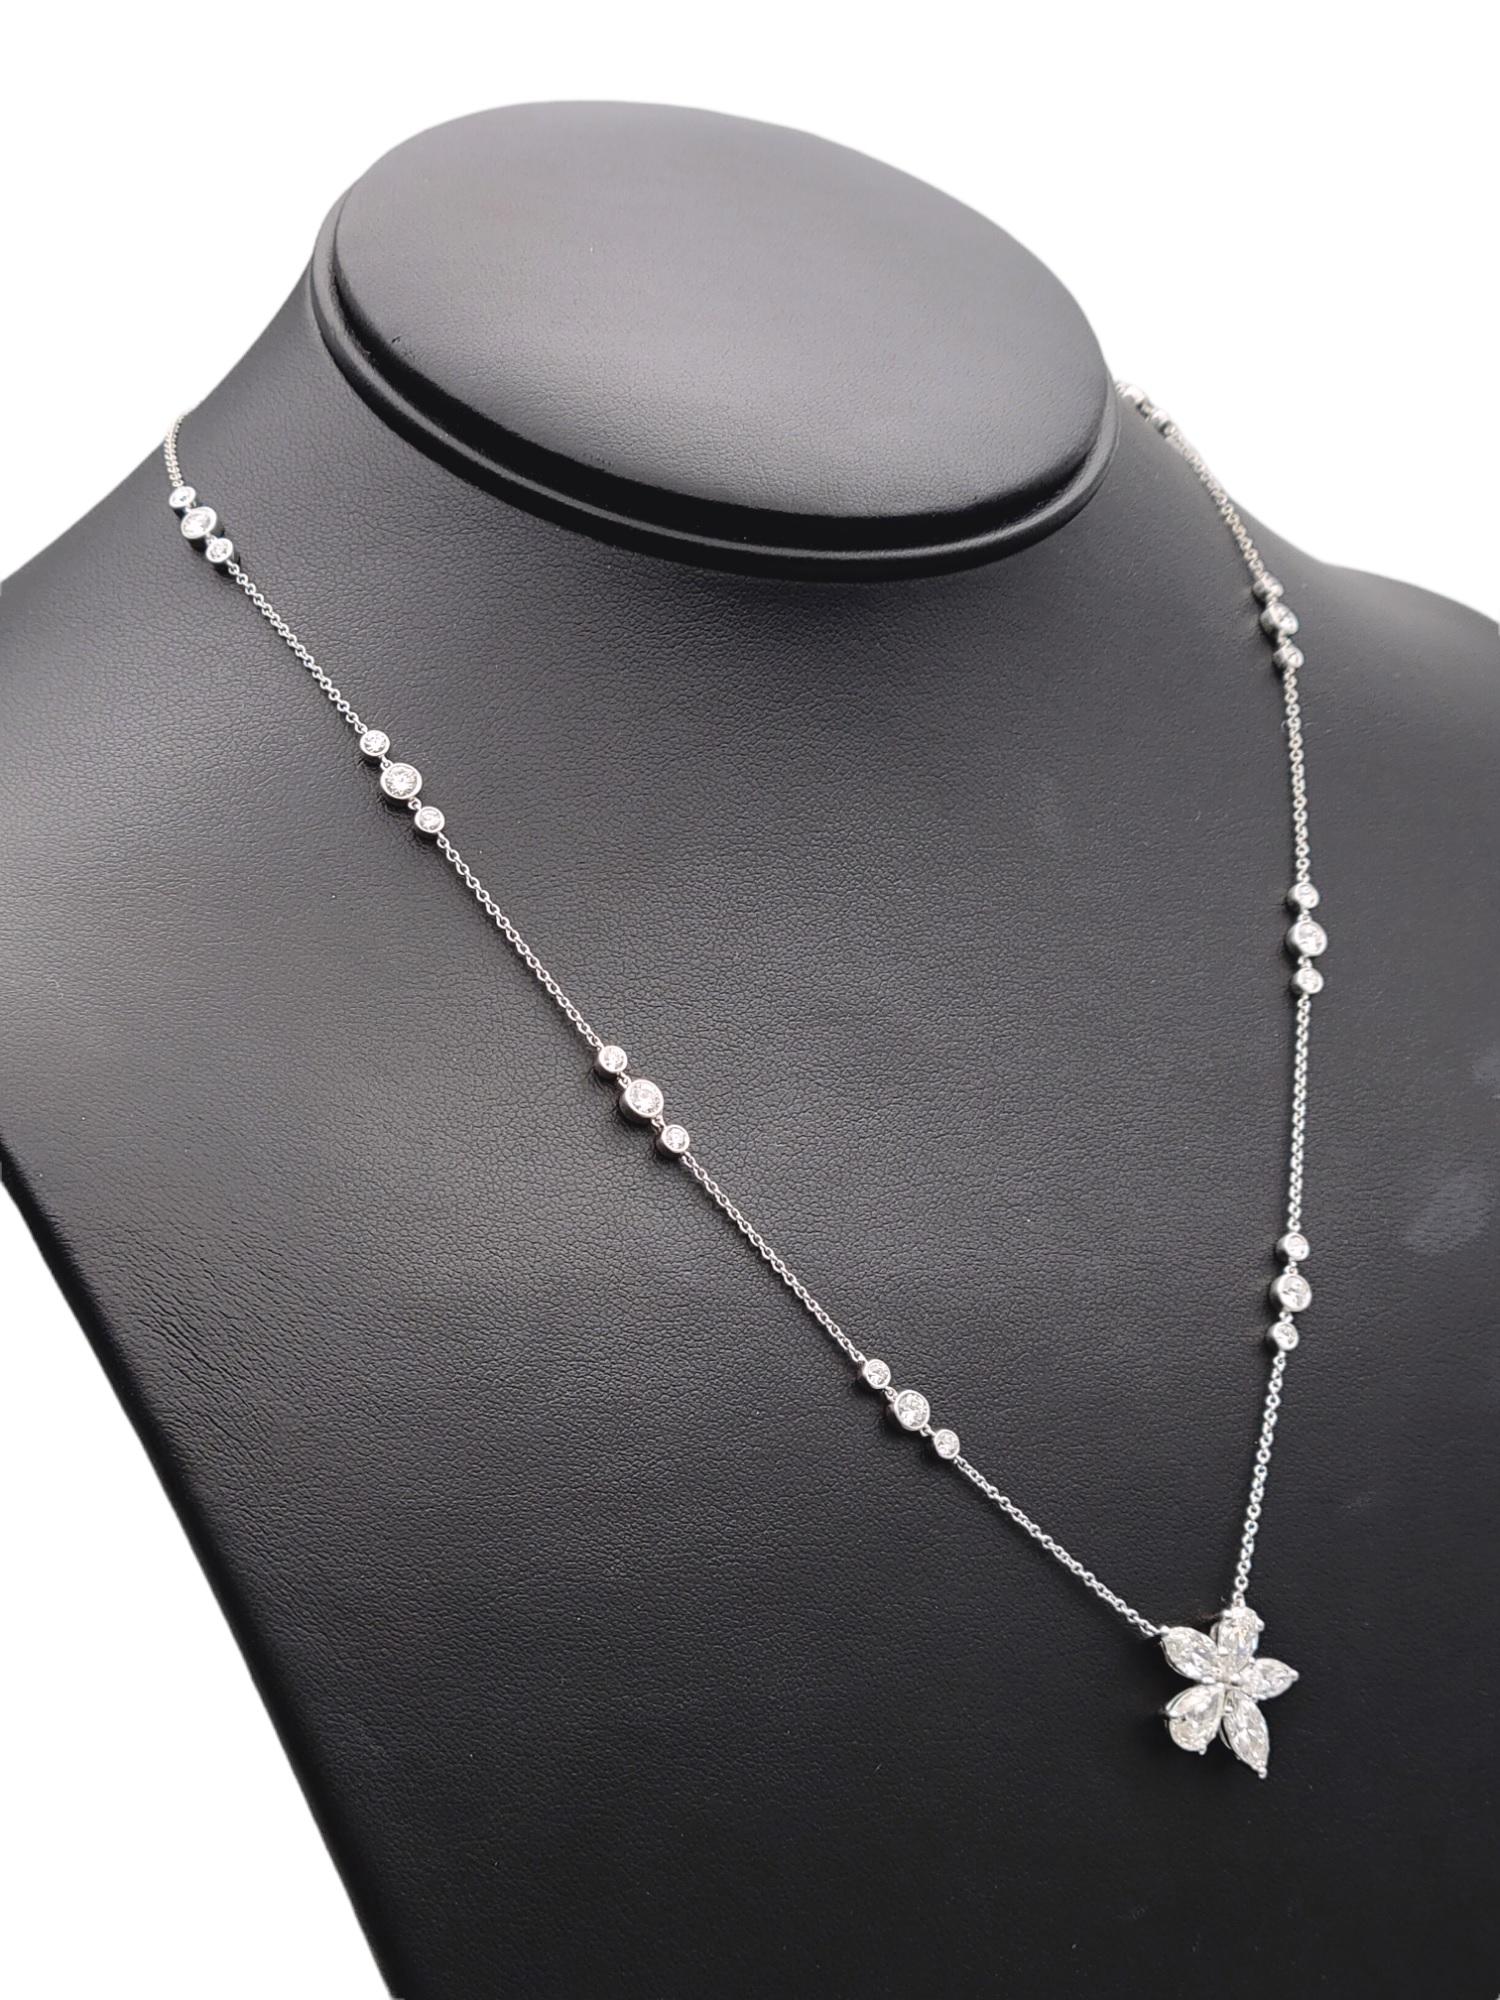 Tiffany & Co. Victoria Diamond Pendant Necklace in Platinum Extra Large, Station 8